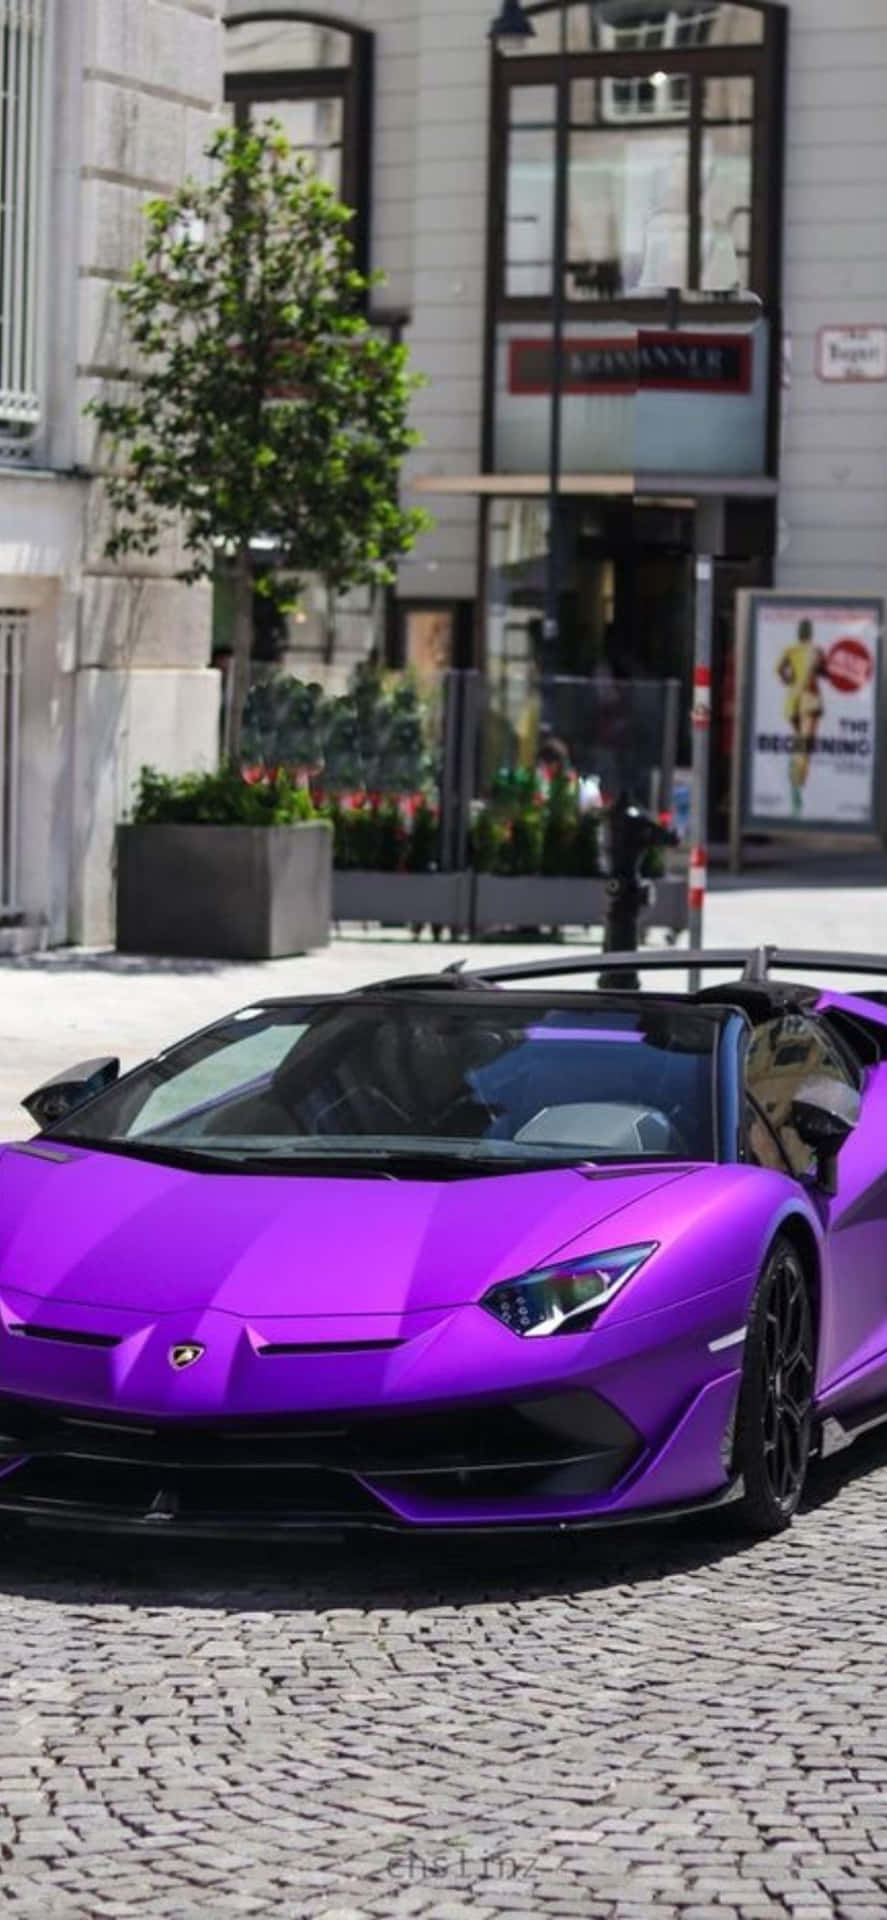 Iphonexs Max Lamborghini Purple Aventador Bakgrundsbild